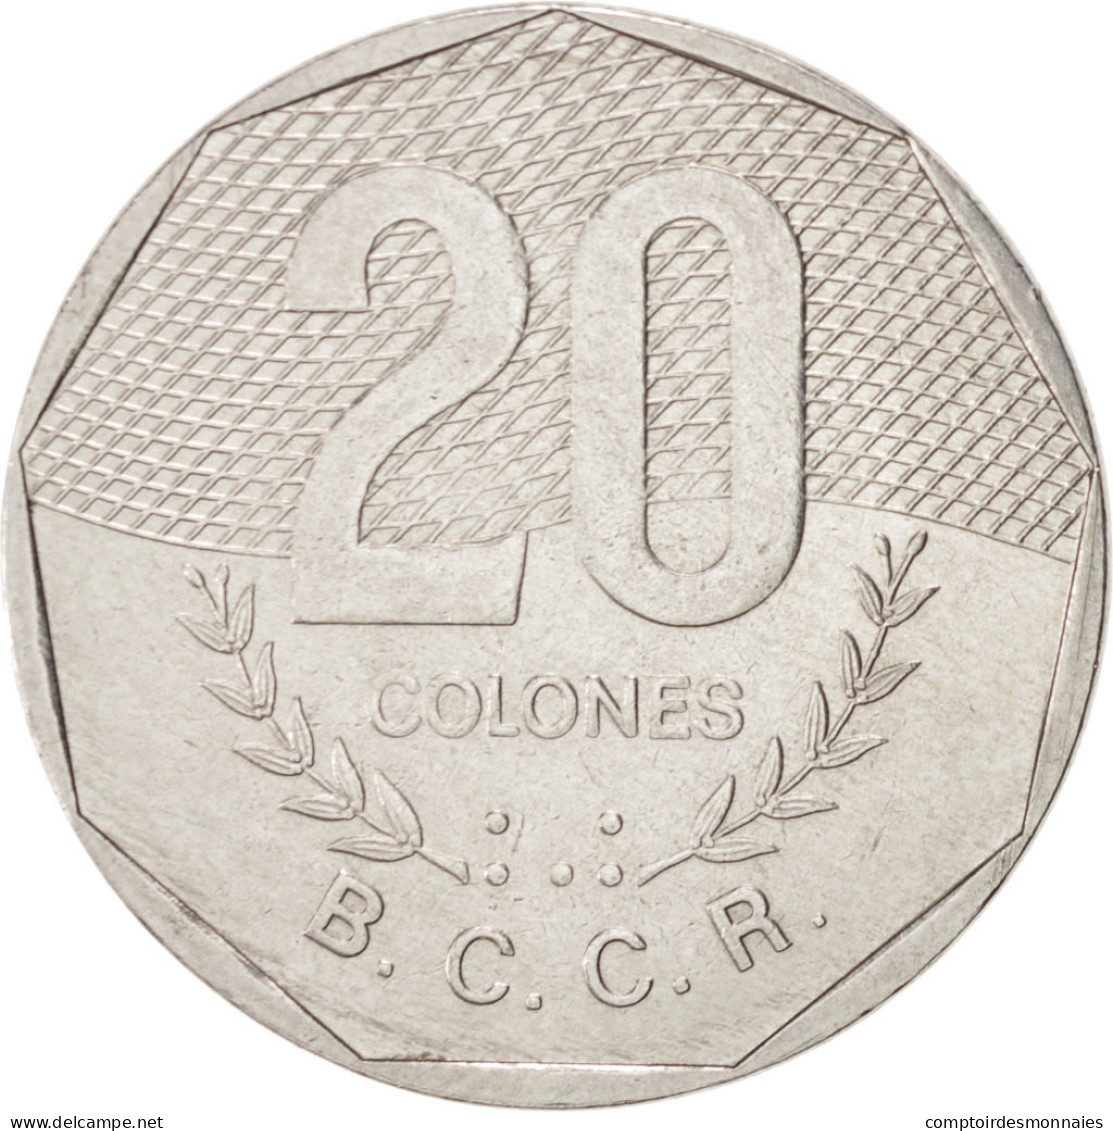 Monnaie, Costa Rica, 20 Colones, 1983, TTB+, Stainless Steel, KM:216.1 - Costa Rica